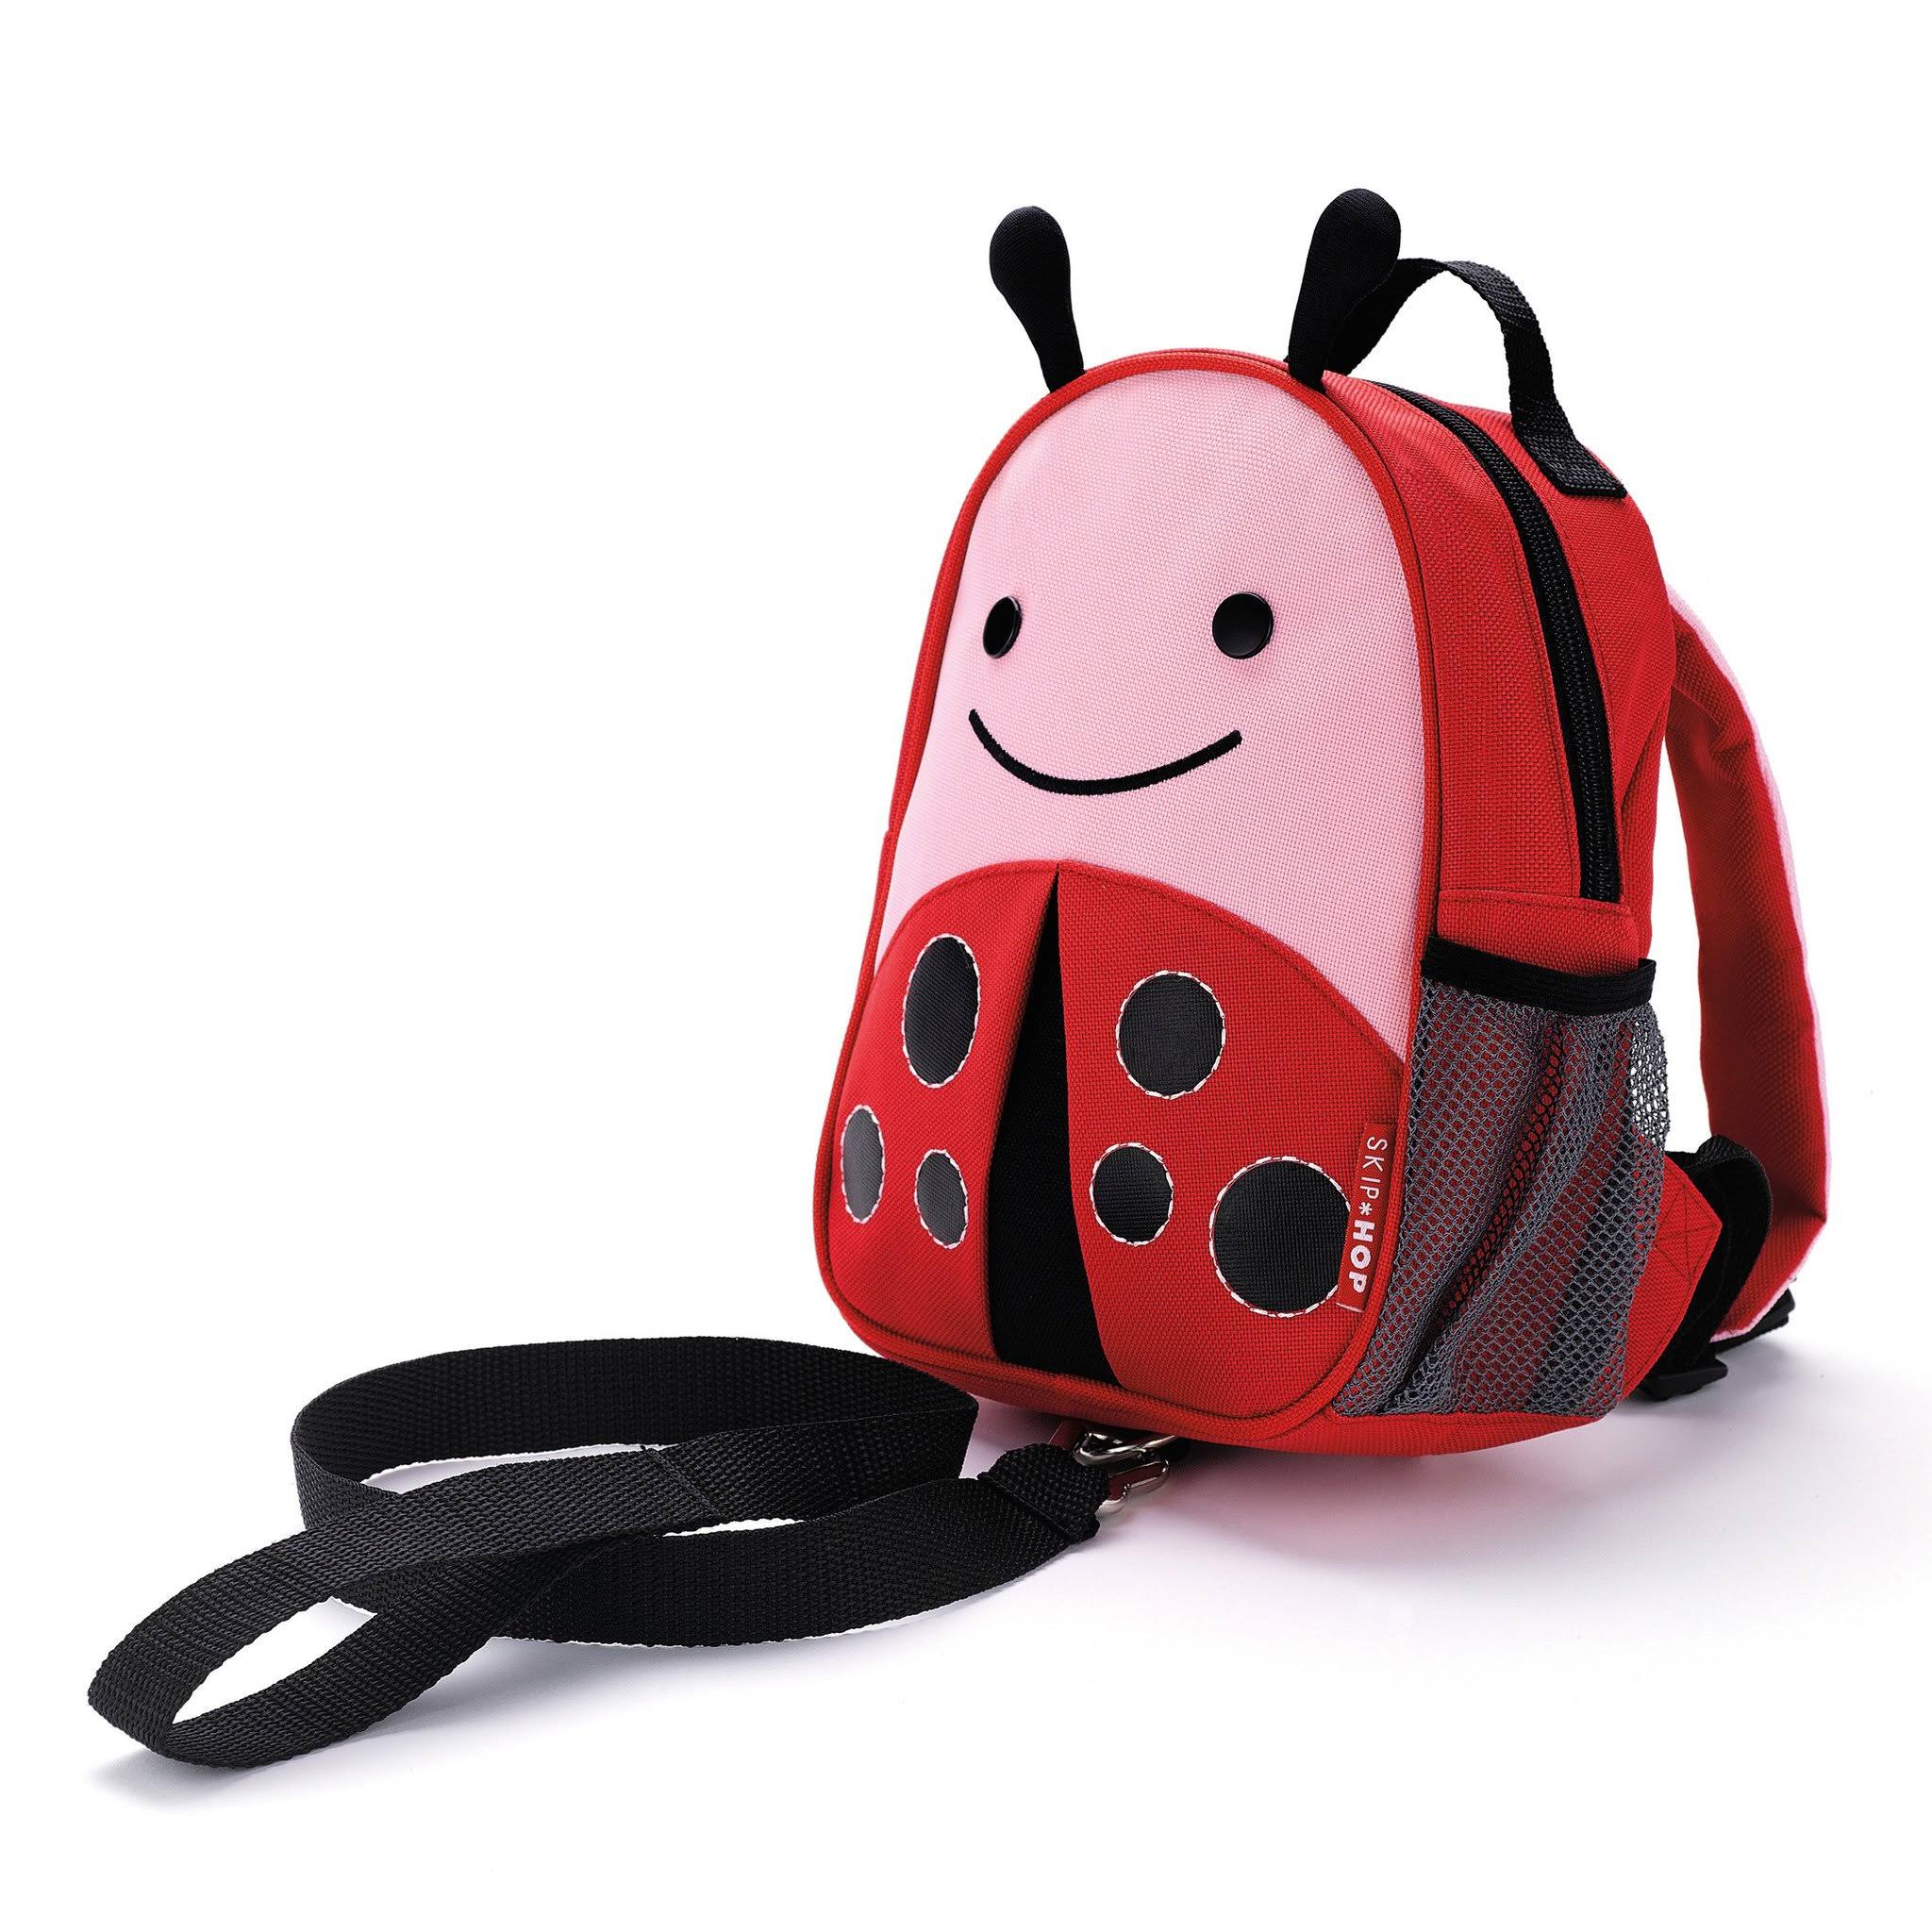 Skip Hop Zoo Little Kid and Toddler Safety Harness Backpack - Livie Ladybug